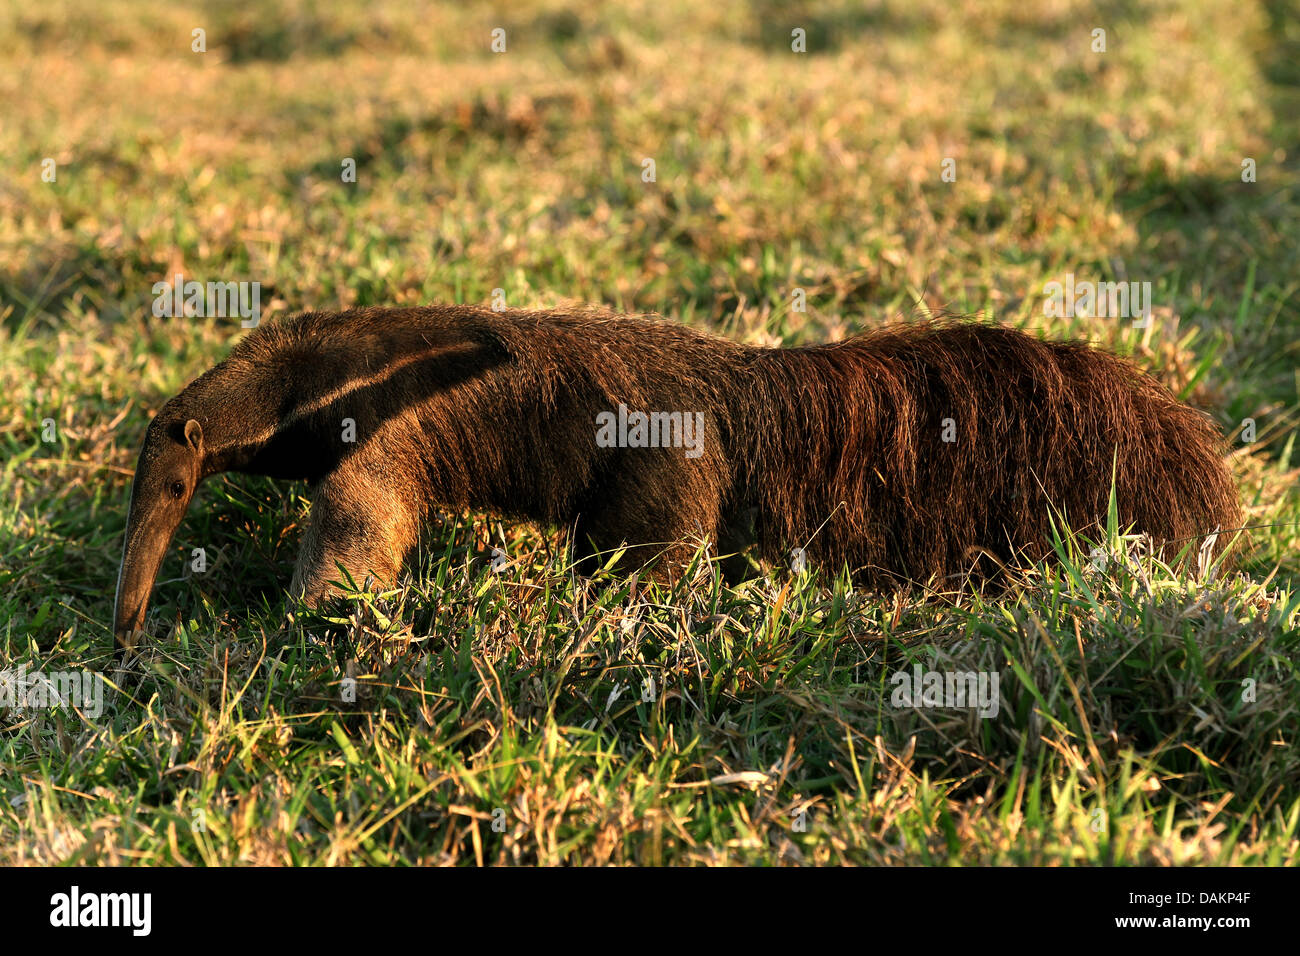 Giant anteater (Myrmecophaga tridactyla), camminando su erba, Brasile, Mato Grosso do Sul Foto Stock